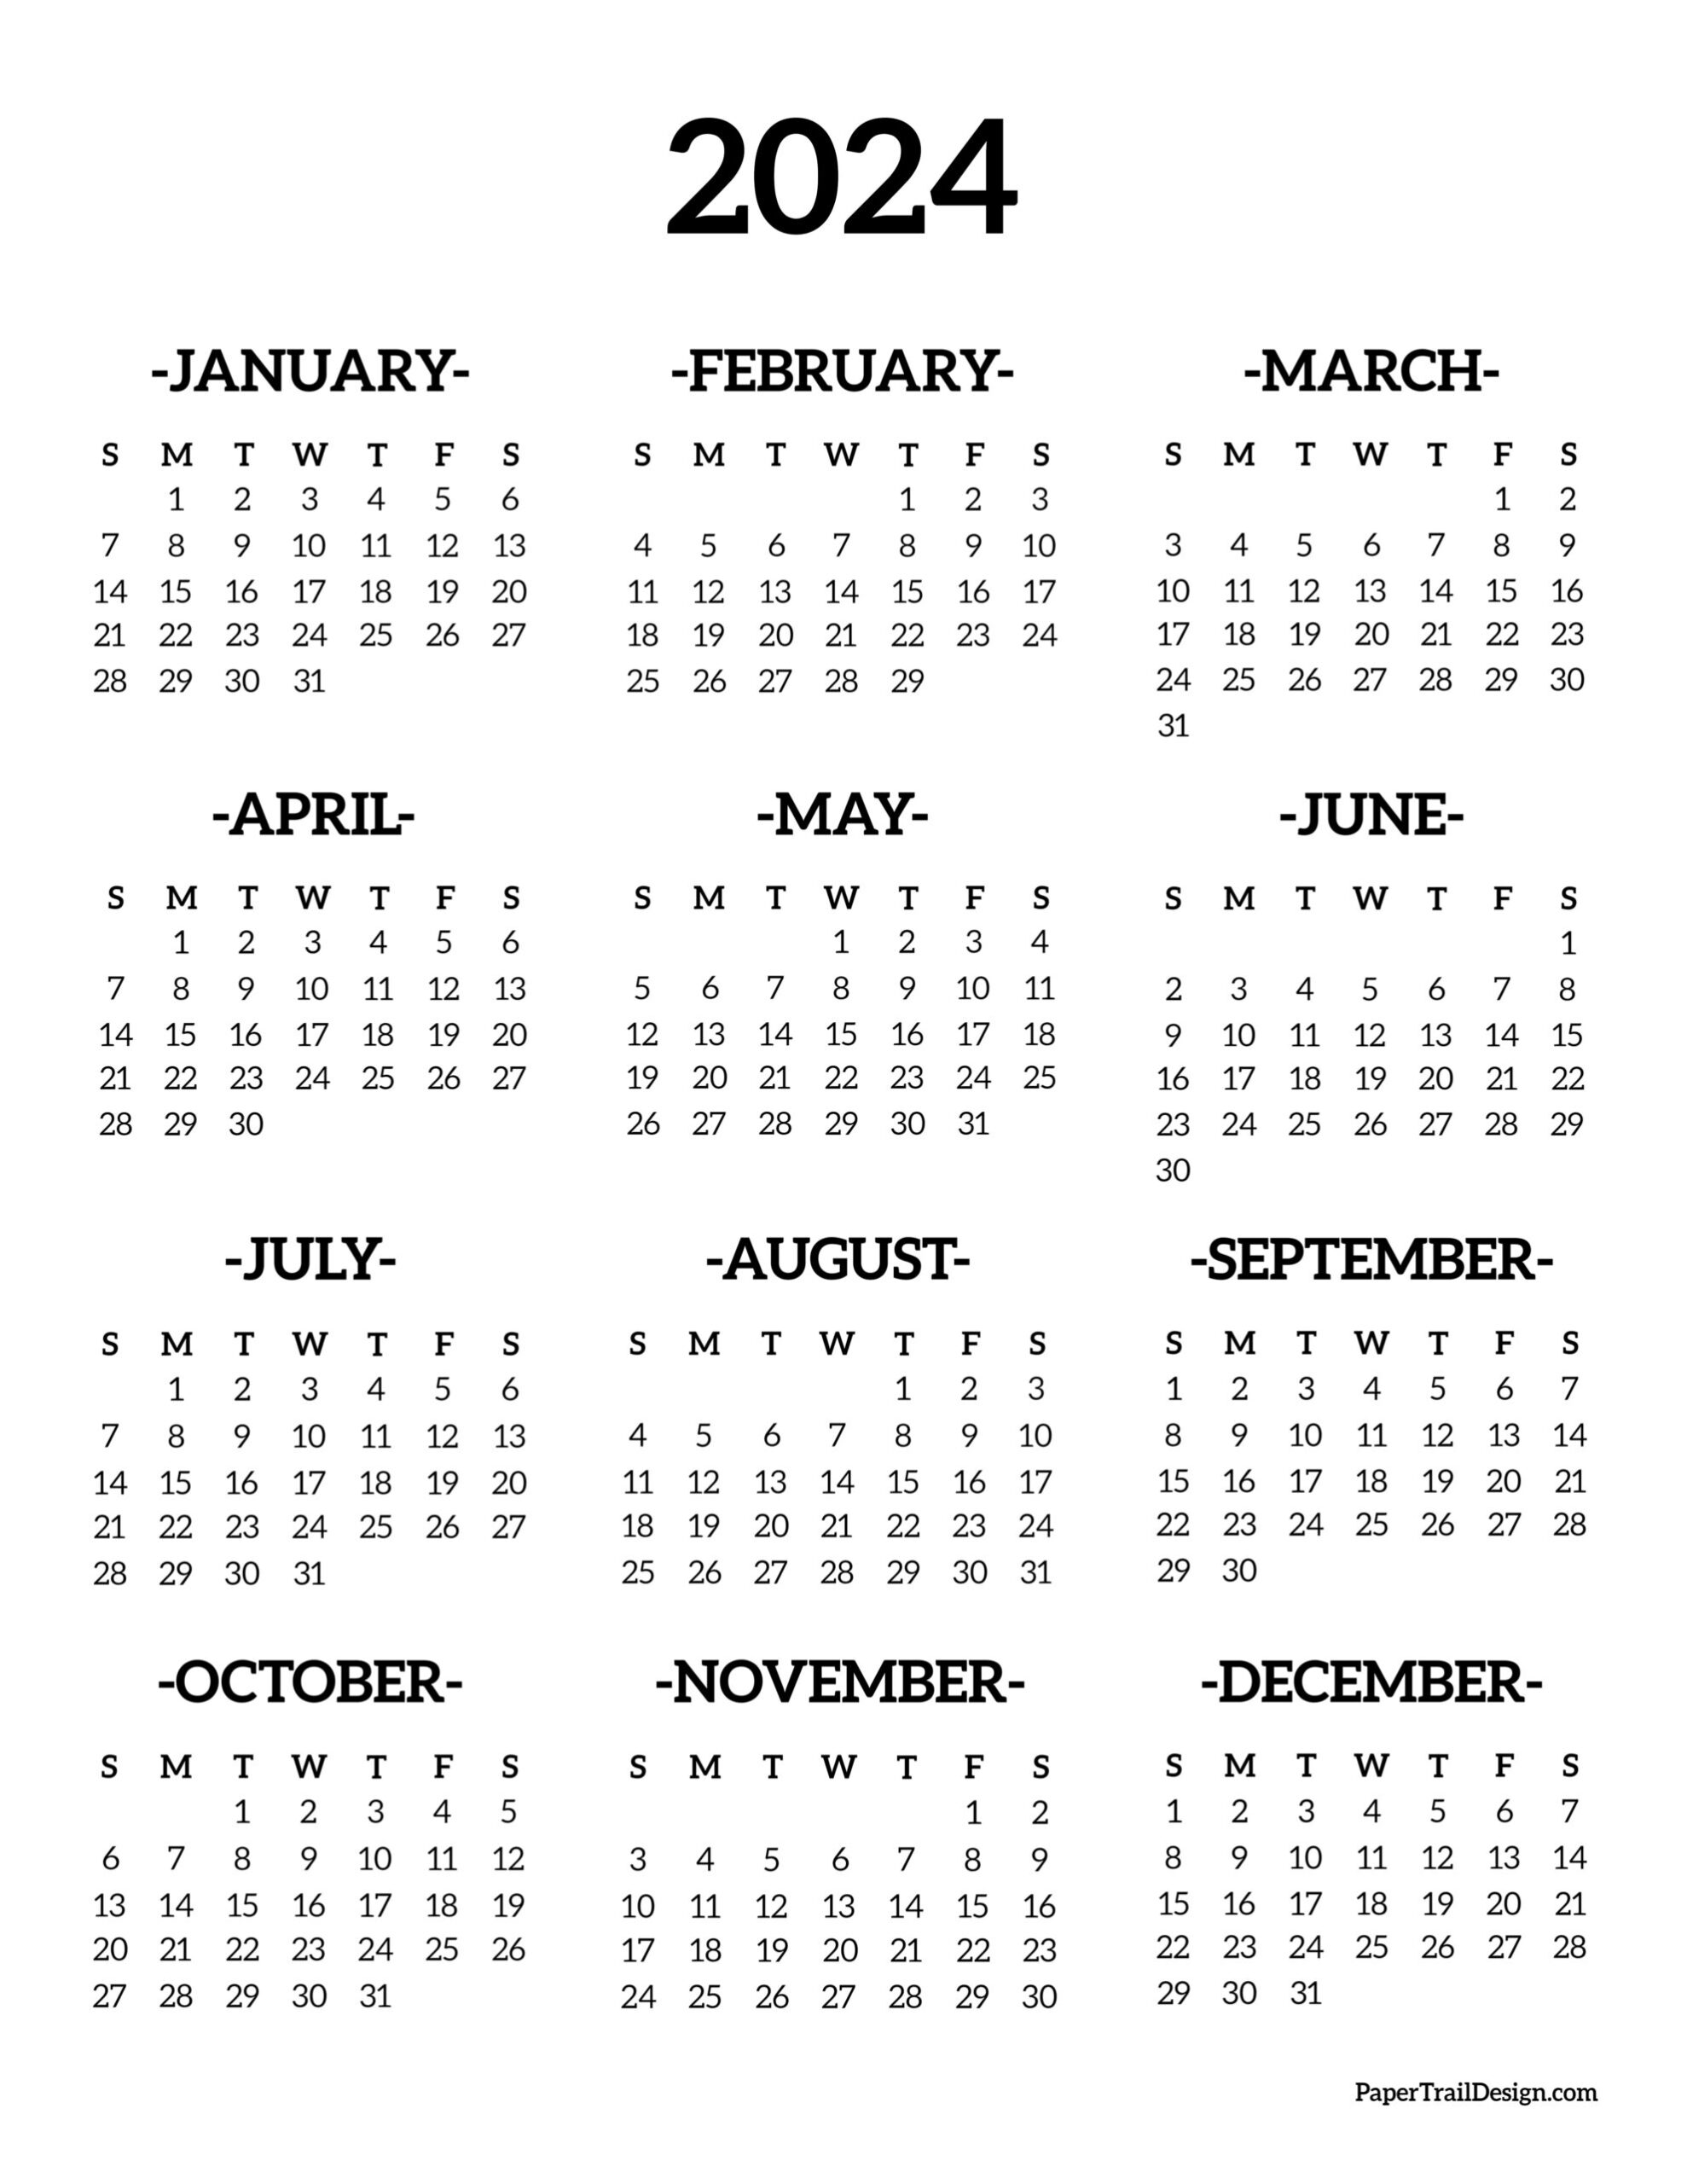 Calendar 2024 Printable One Page - Paper Trail Design for Printable Template 2024 Calendar